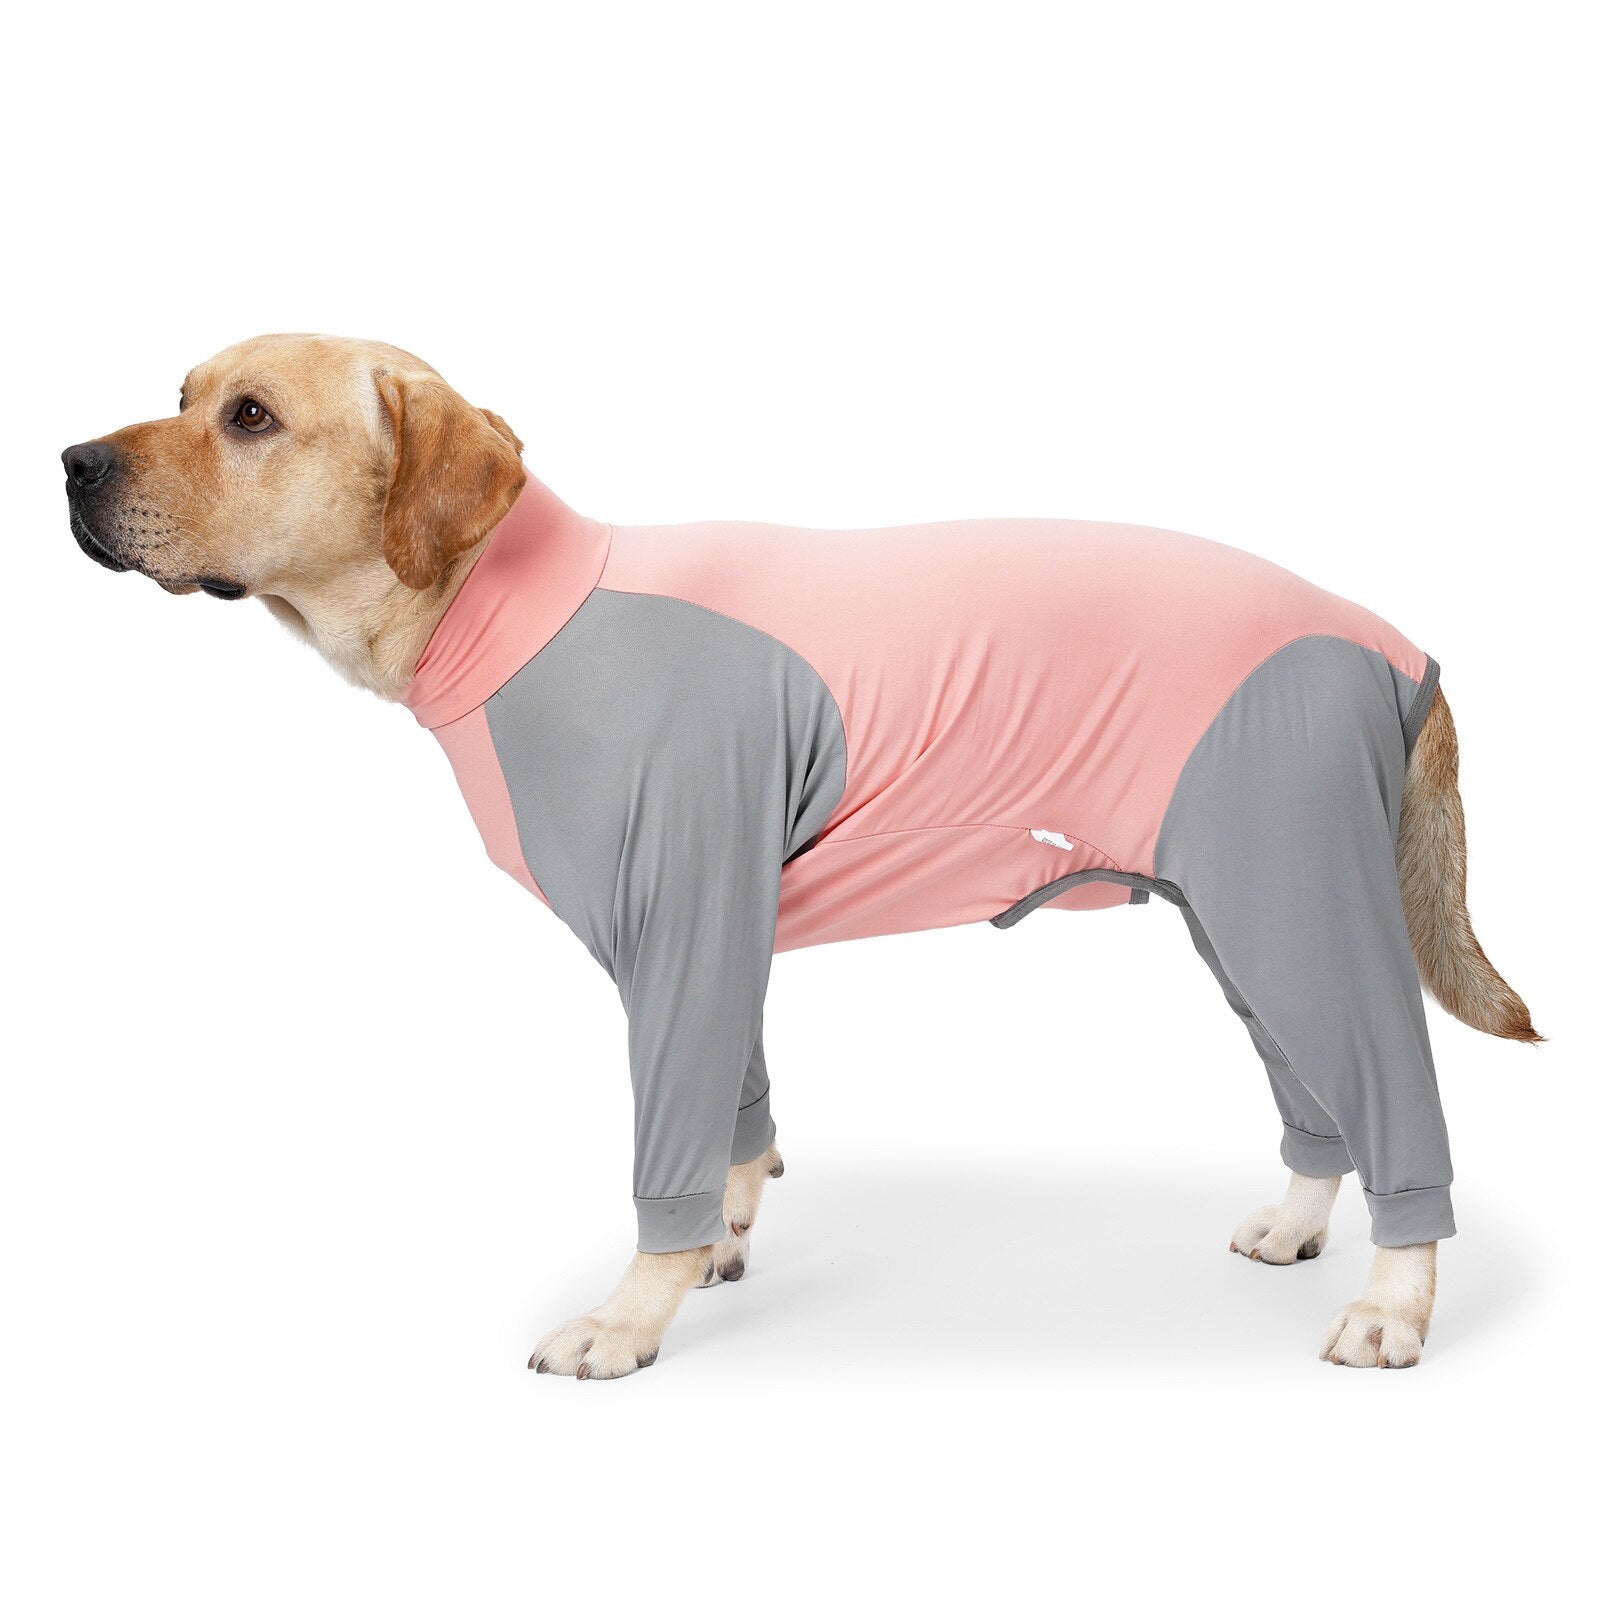 Pet Dog Four-legged Clothes Anti-hair Loss High Elasticity Home Clothes Crew Neck Sleepwear Pajamas